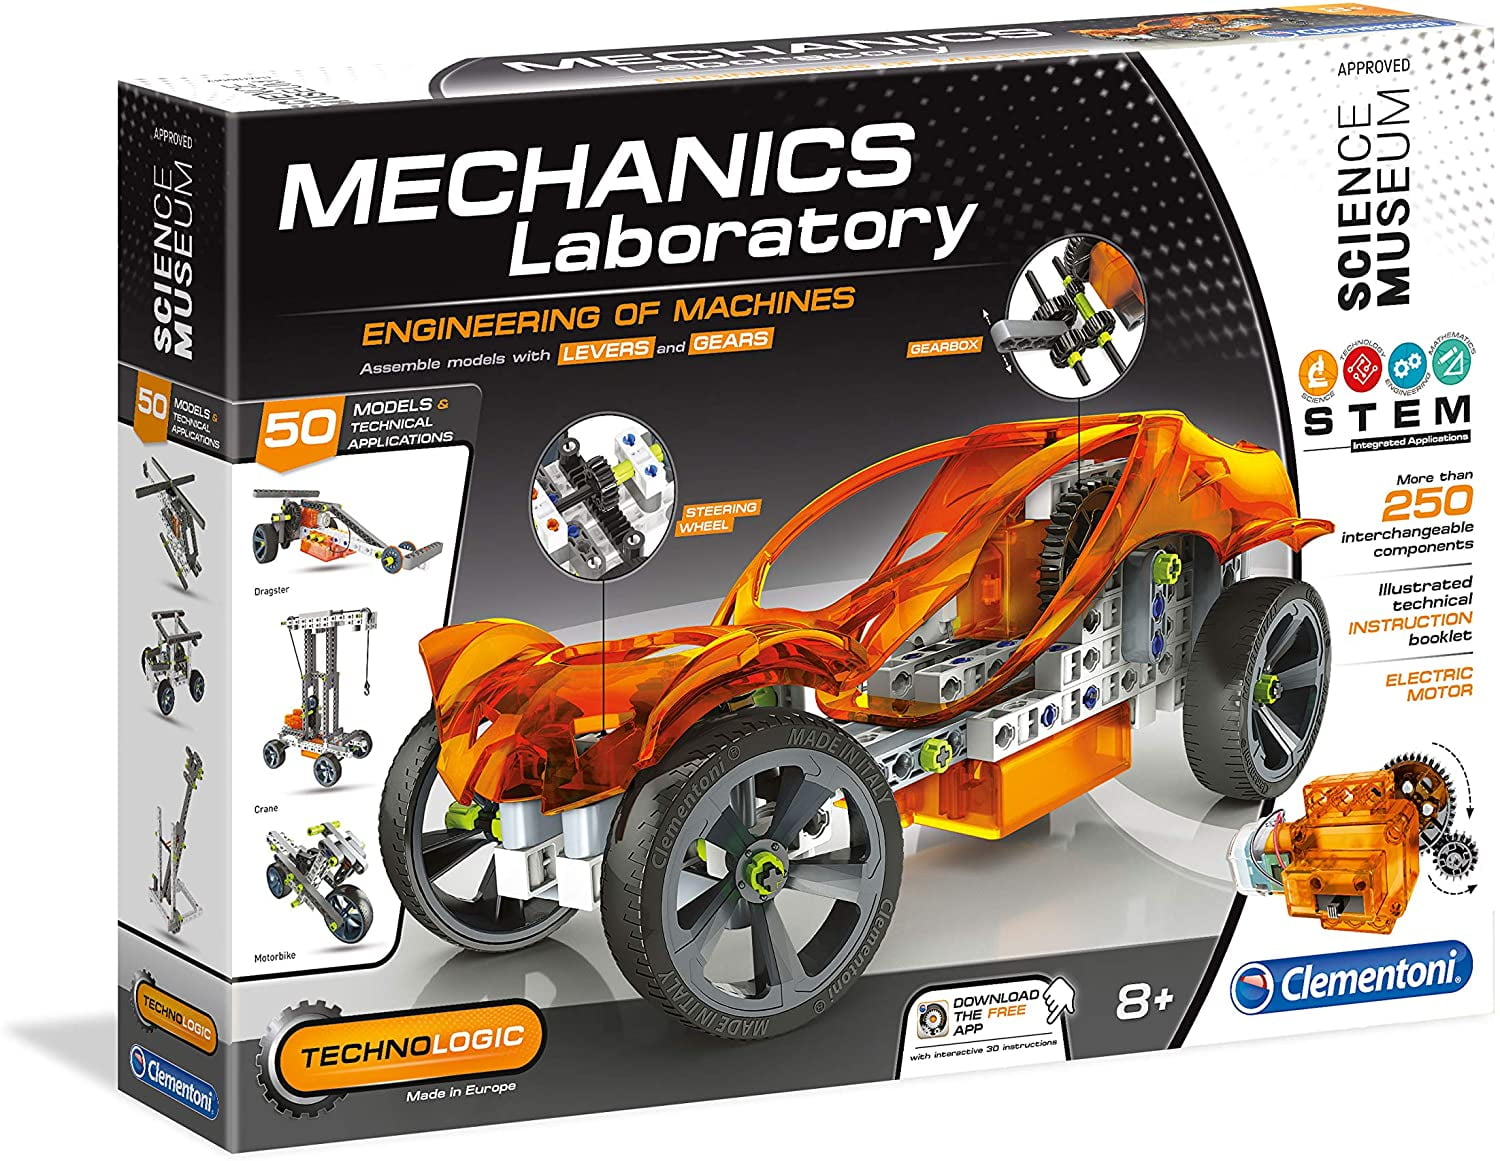 Science & Play Toys Clementoni Science MUSUEM Mechanics Laboratory Lab 